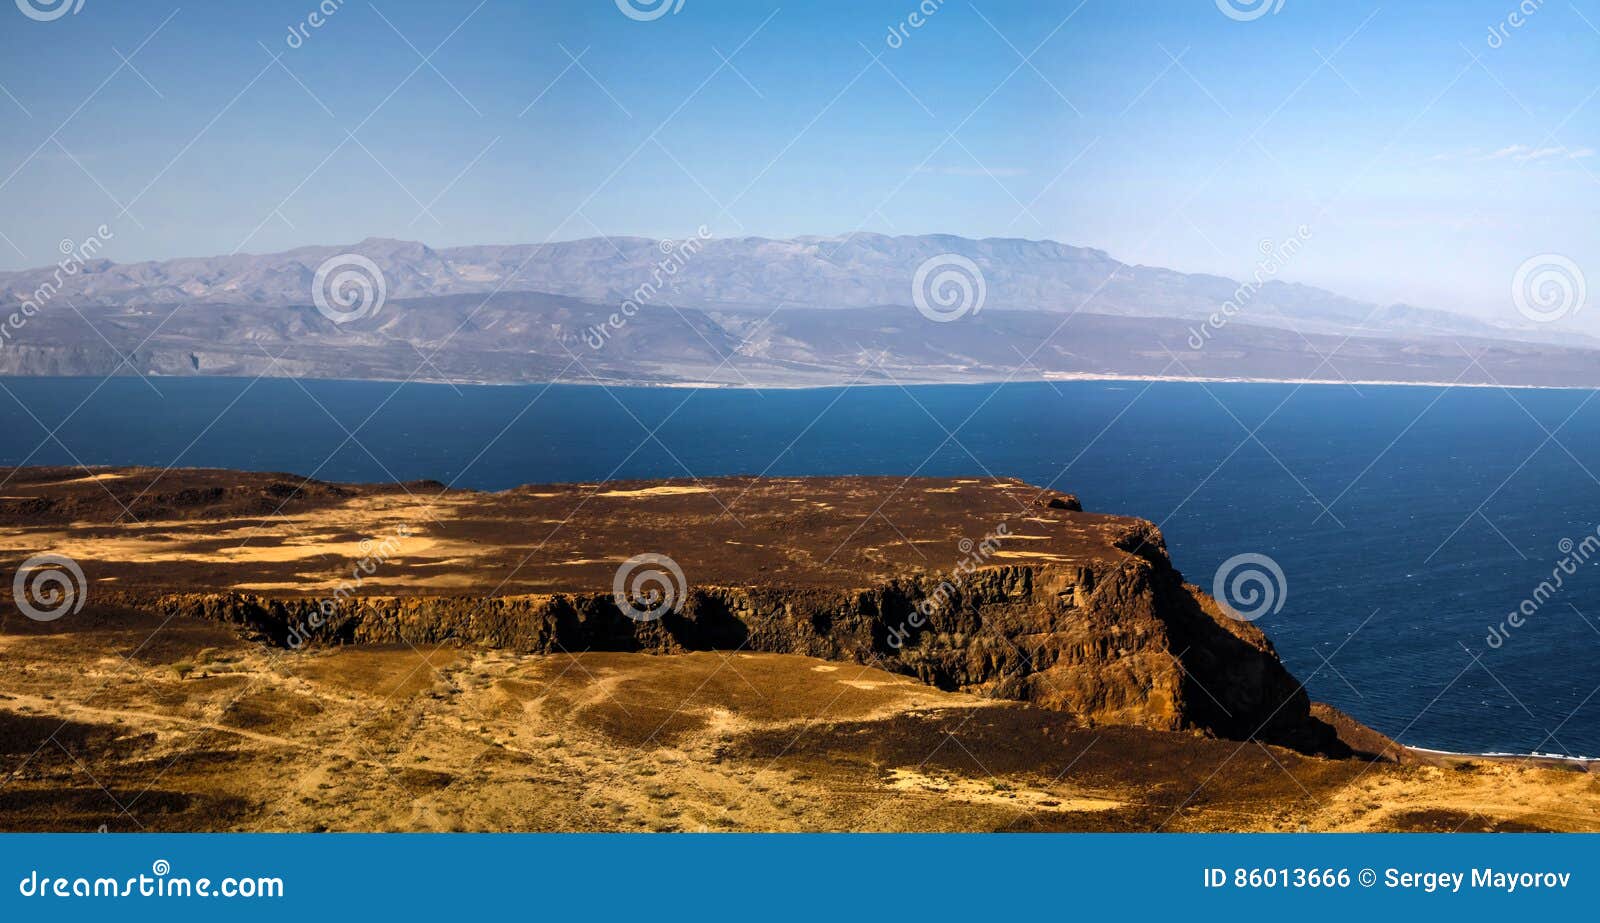 gulf of tadjoura and ghoubet lake djibouti